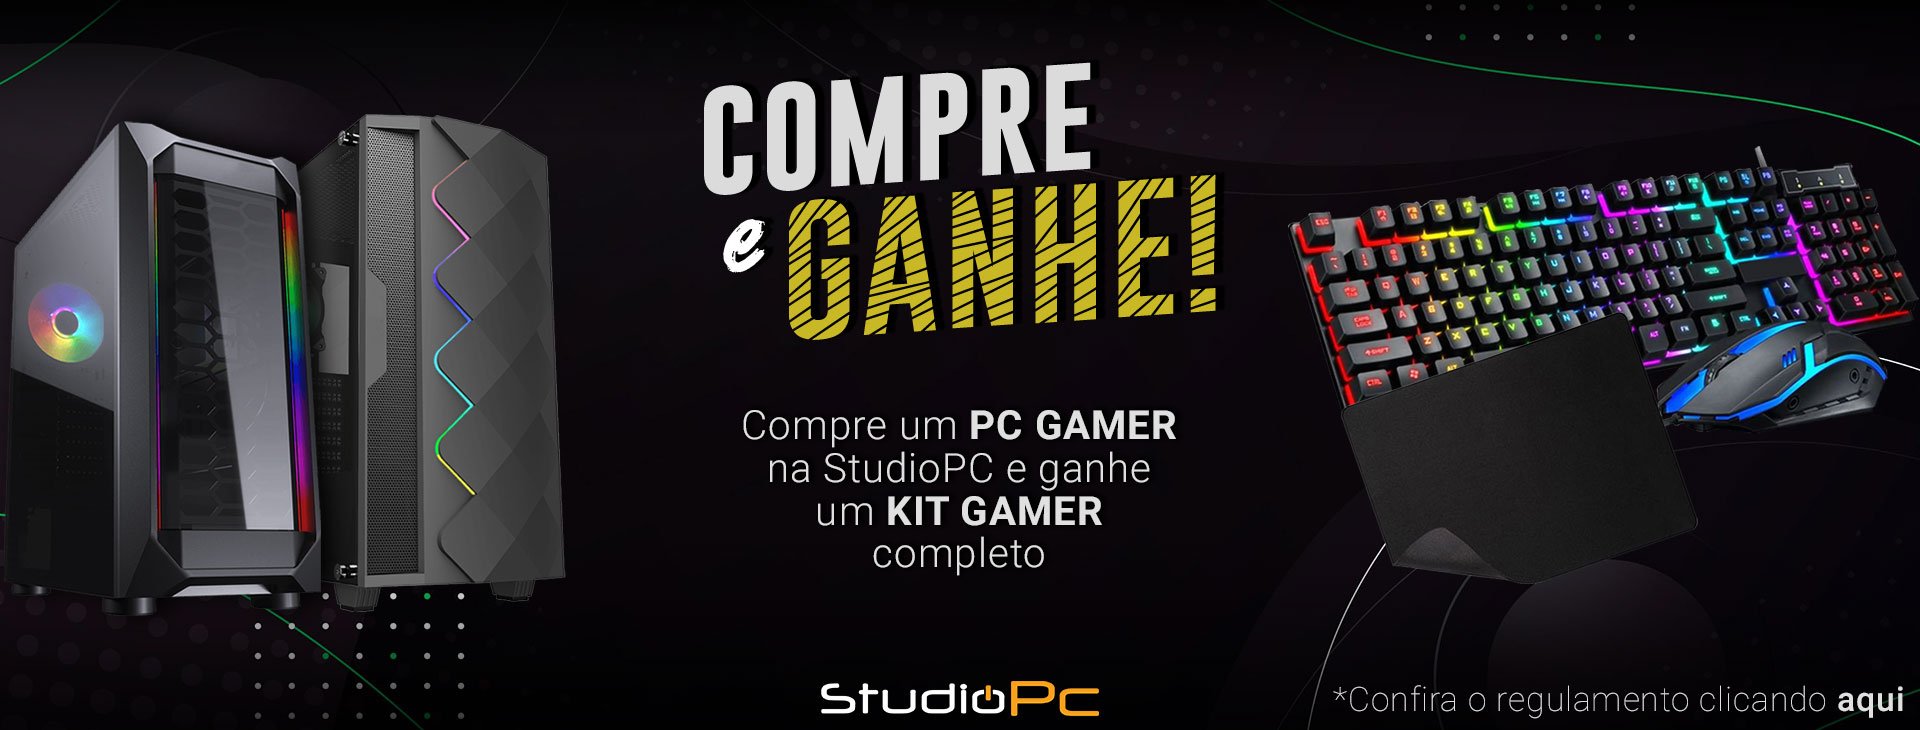 Studio Pc - Compre seu Pc Gamer aqui na StudioPC e tenha